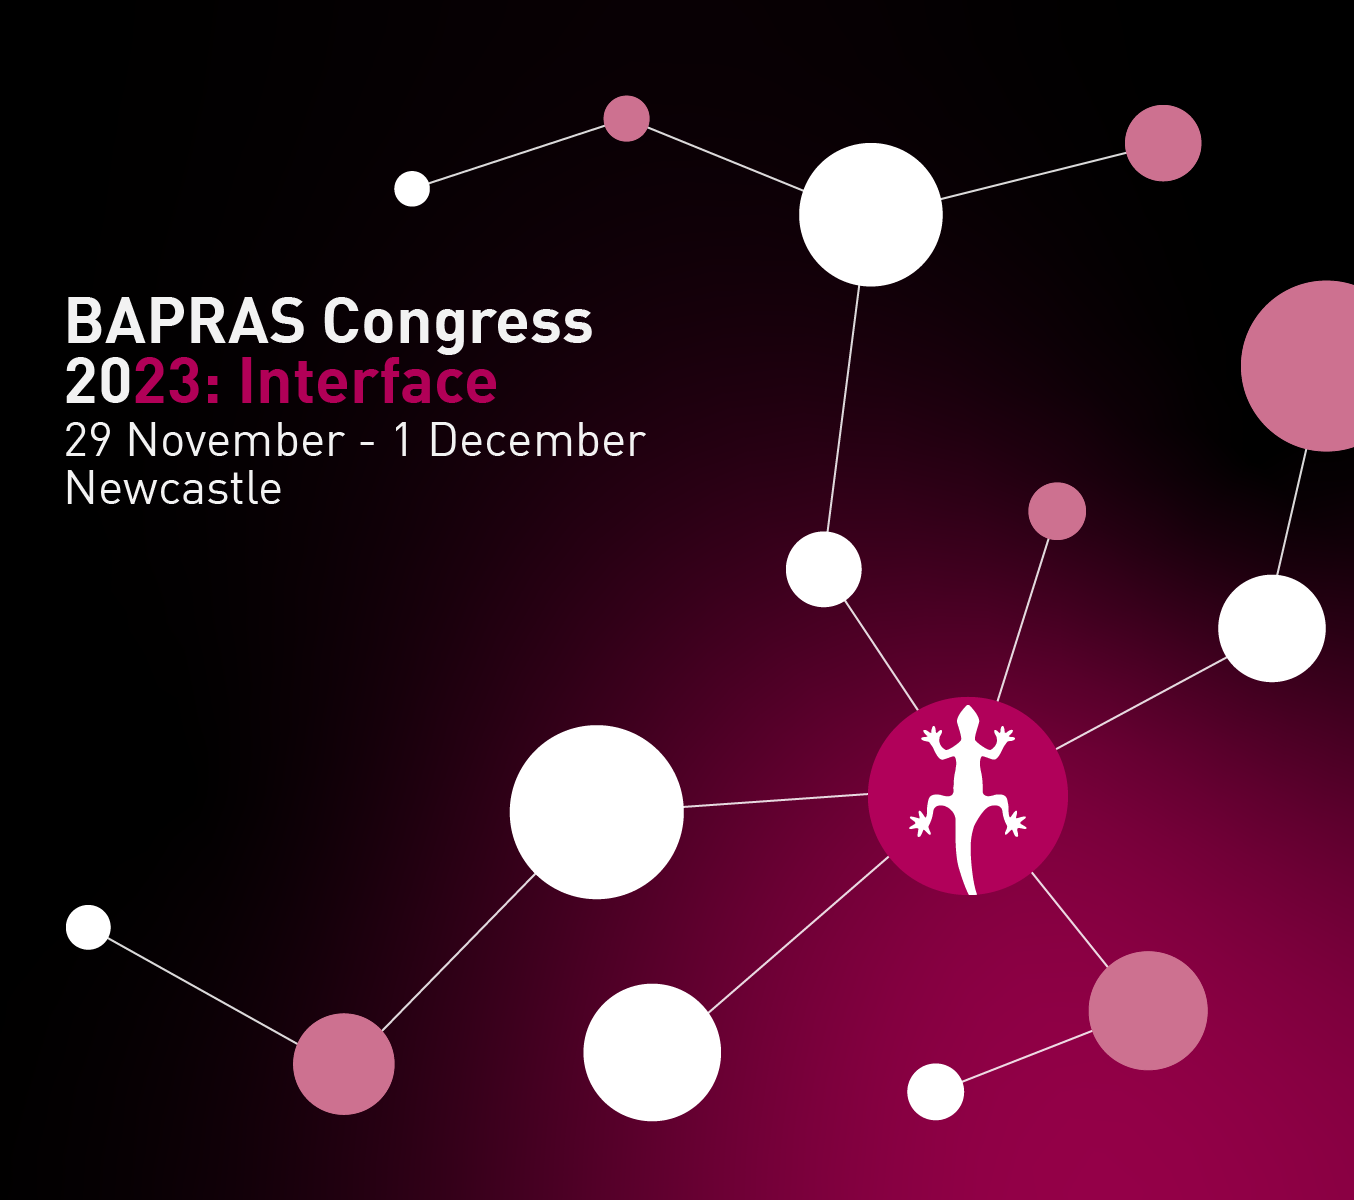 Get ready for BAPRAS Congress 2023!